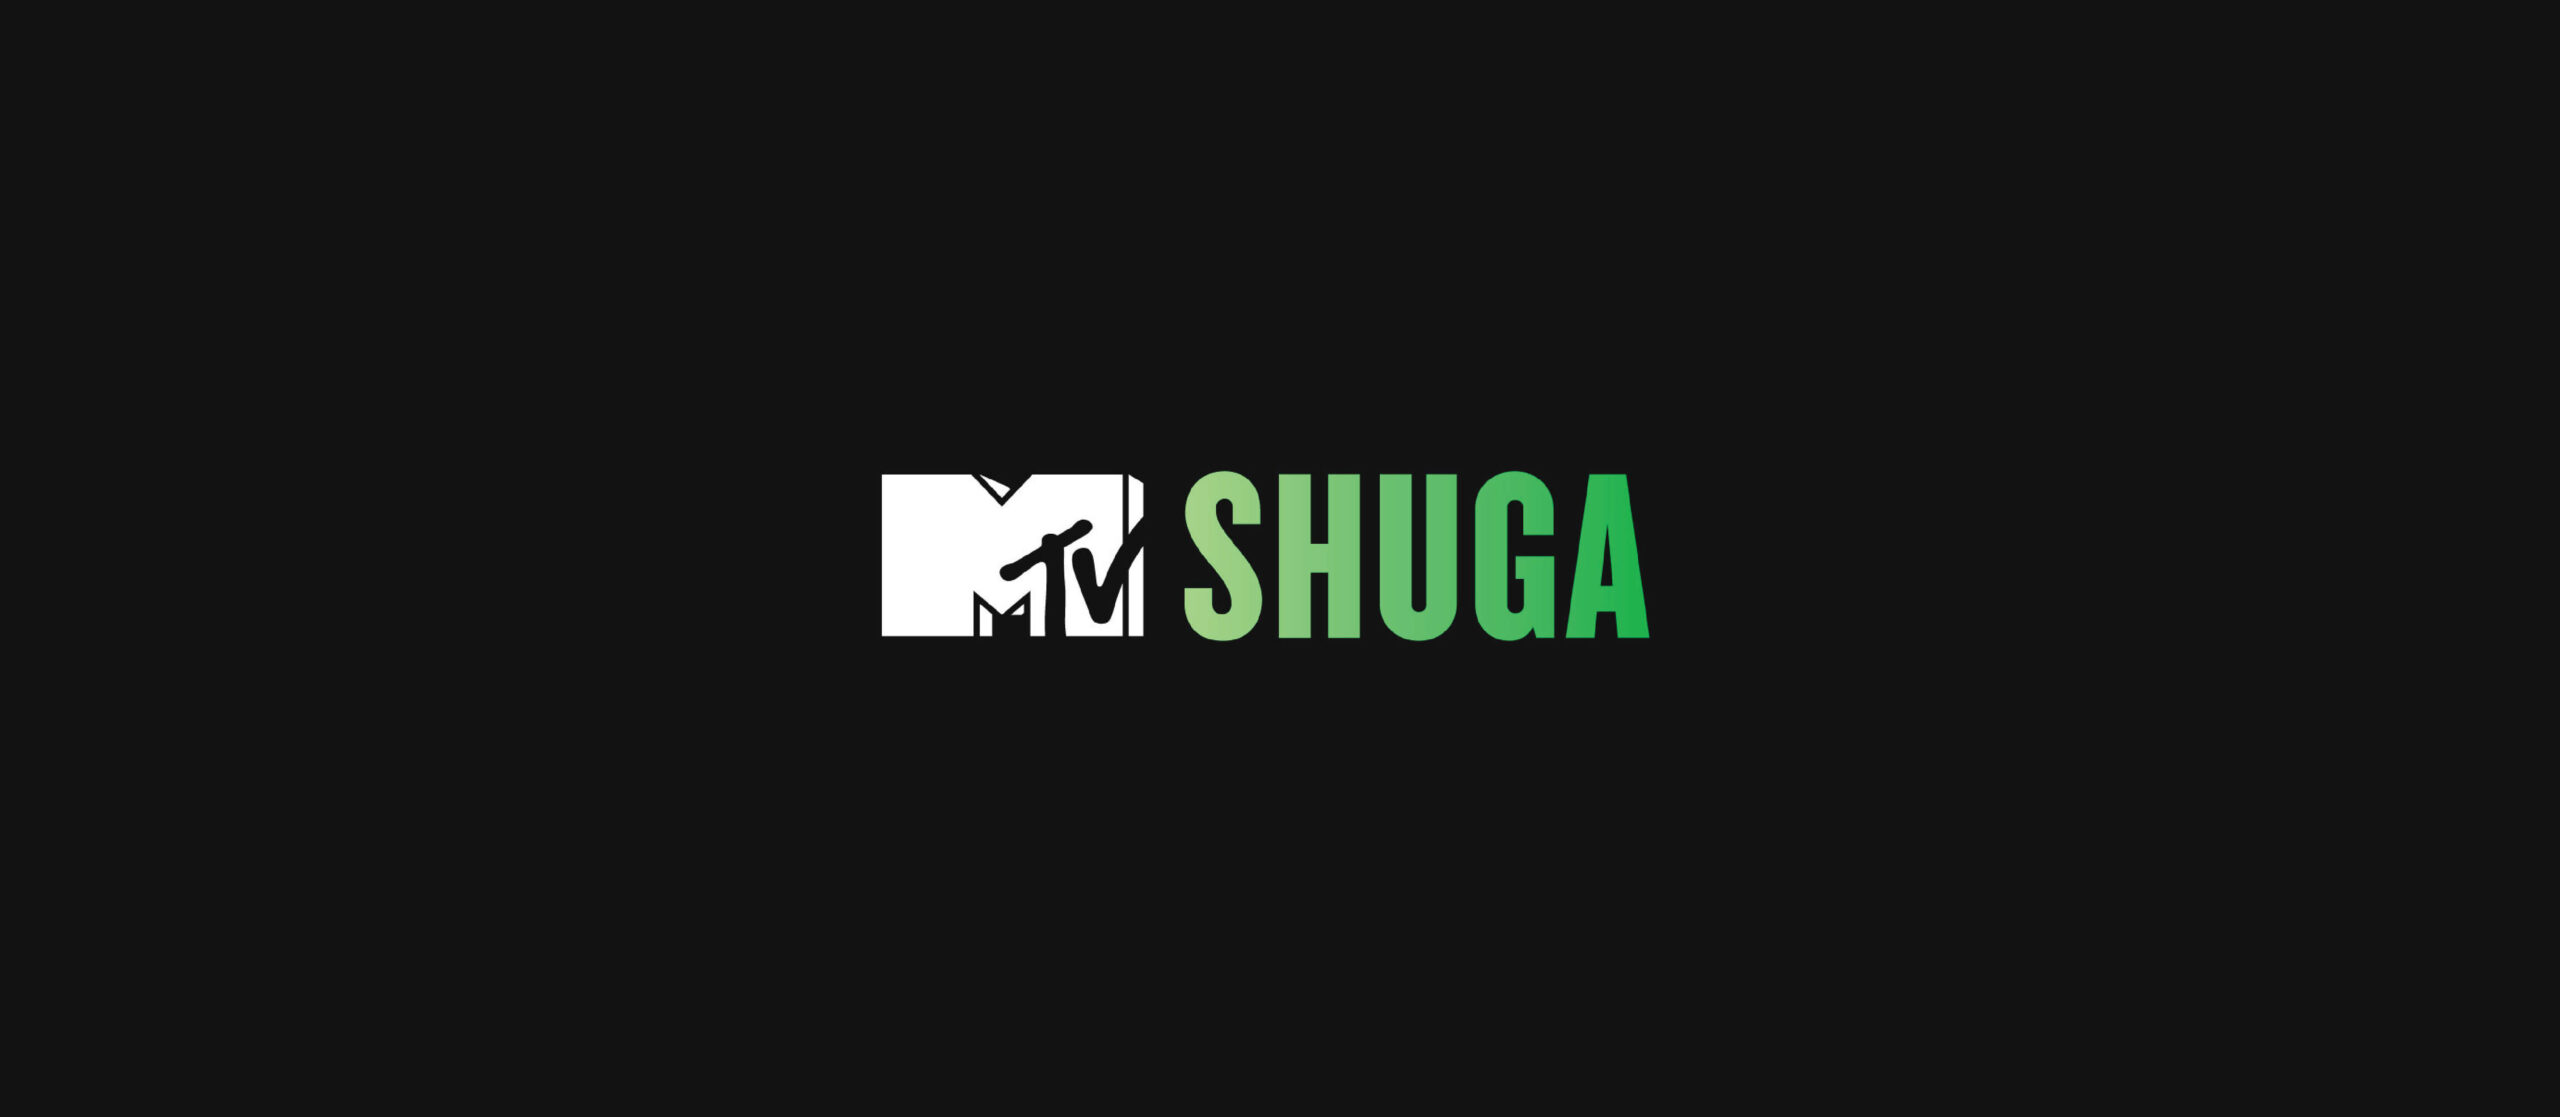 MTV Shuga / Advertising Campaign